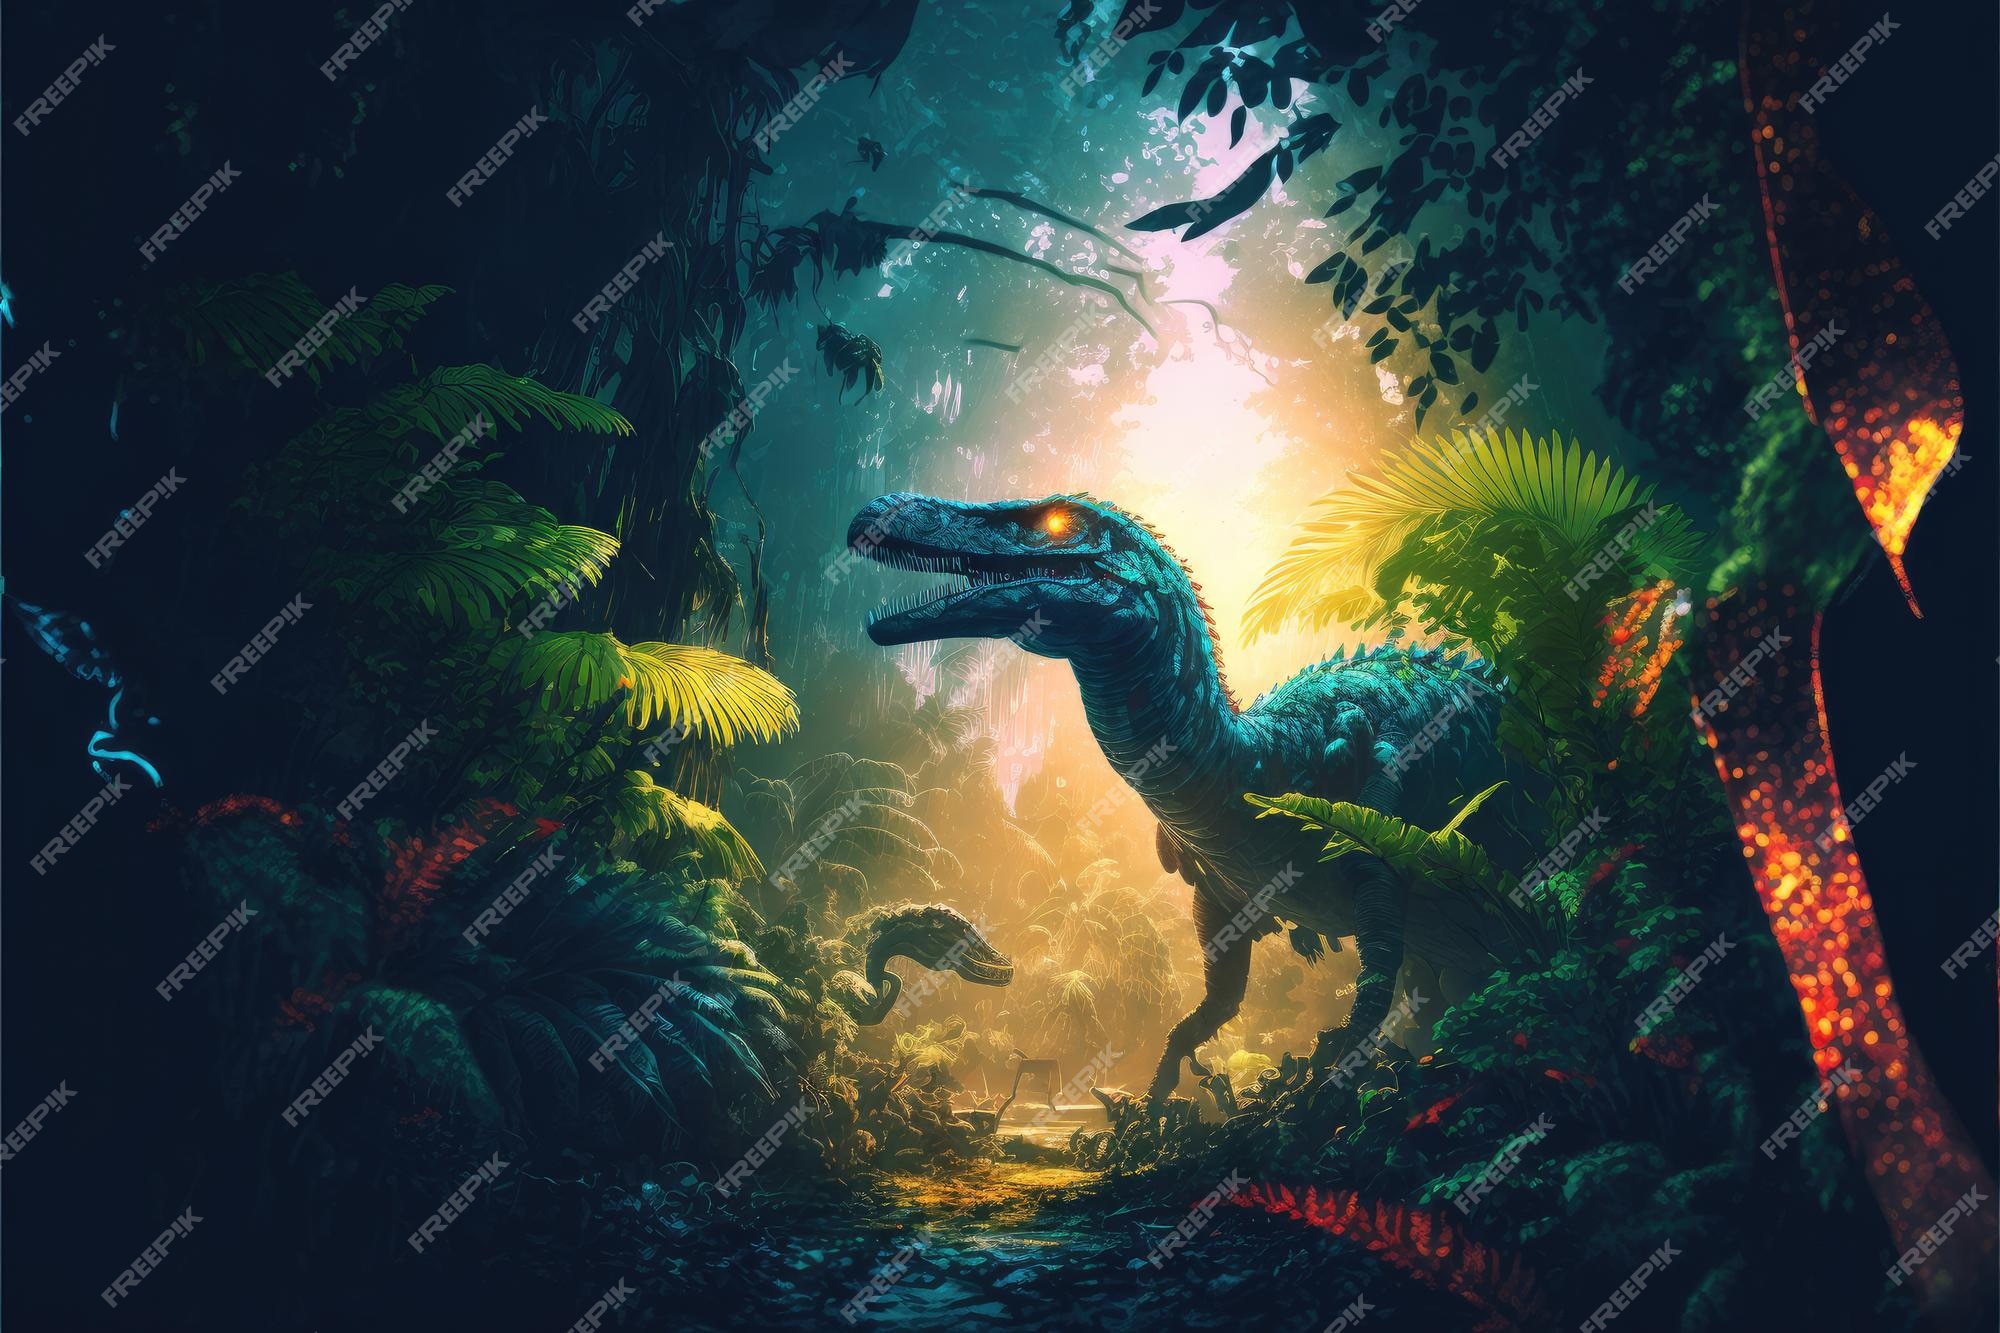 Premium Photo Fantasy In Dinosaur Or Predator The Deep Jungle